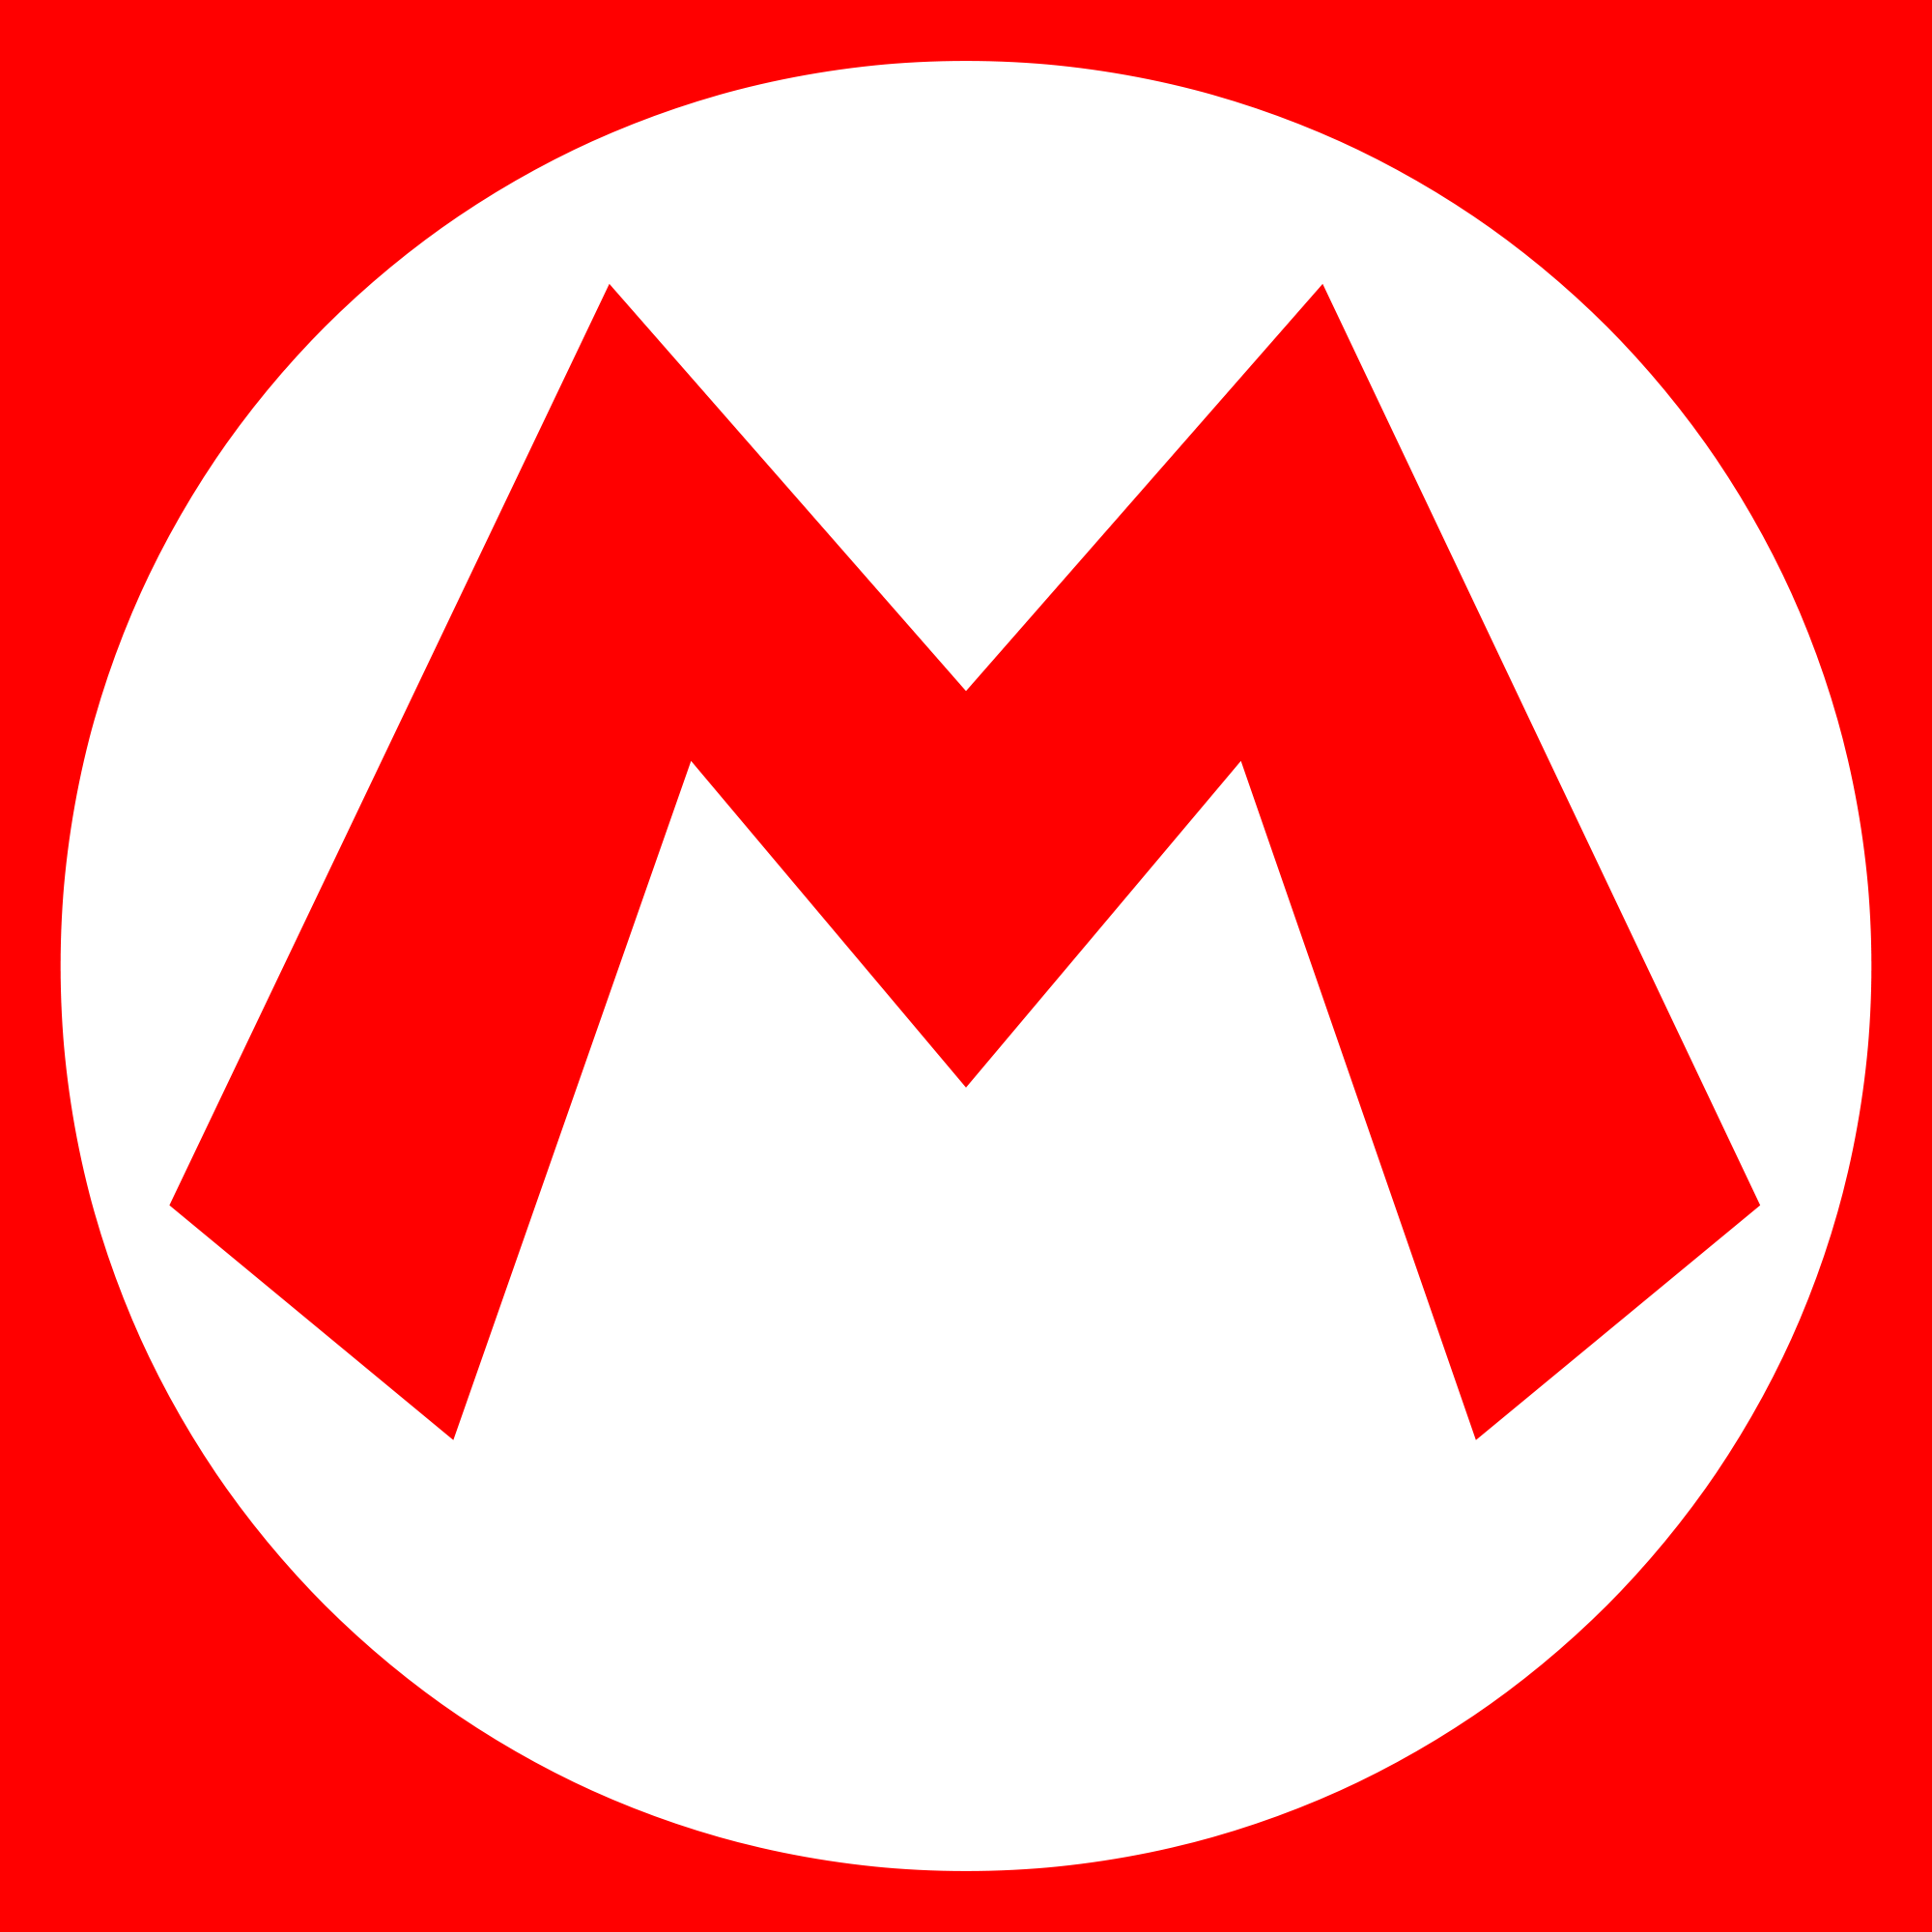 Epic Super Smash Bros Logo - Mario (franchise)